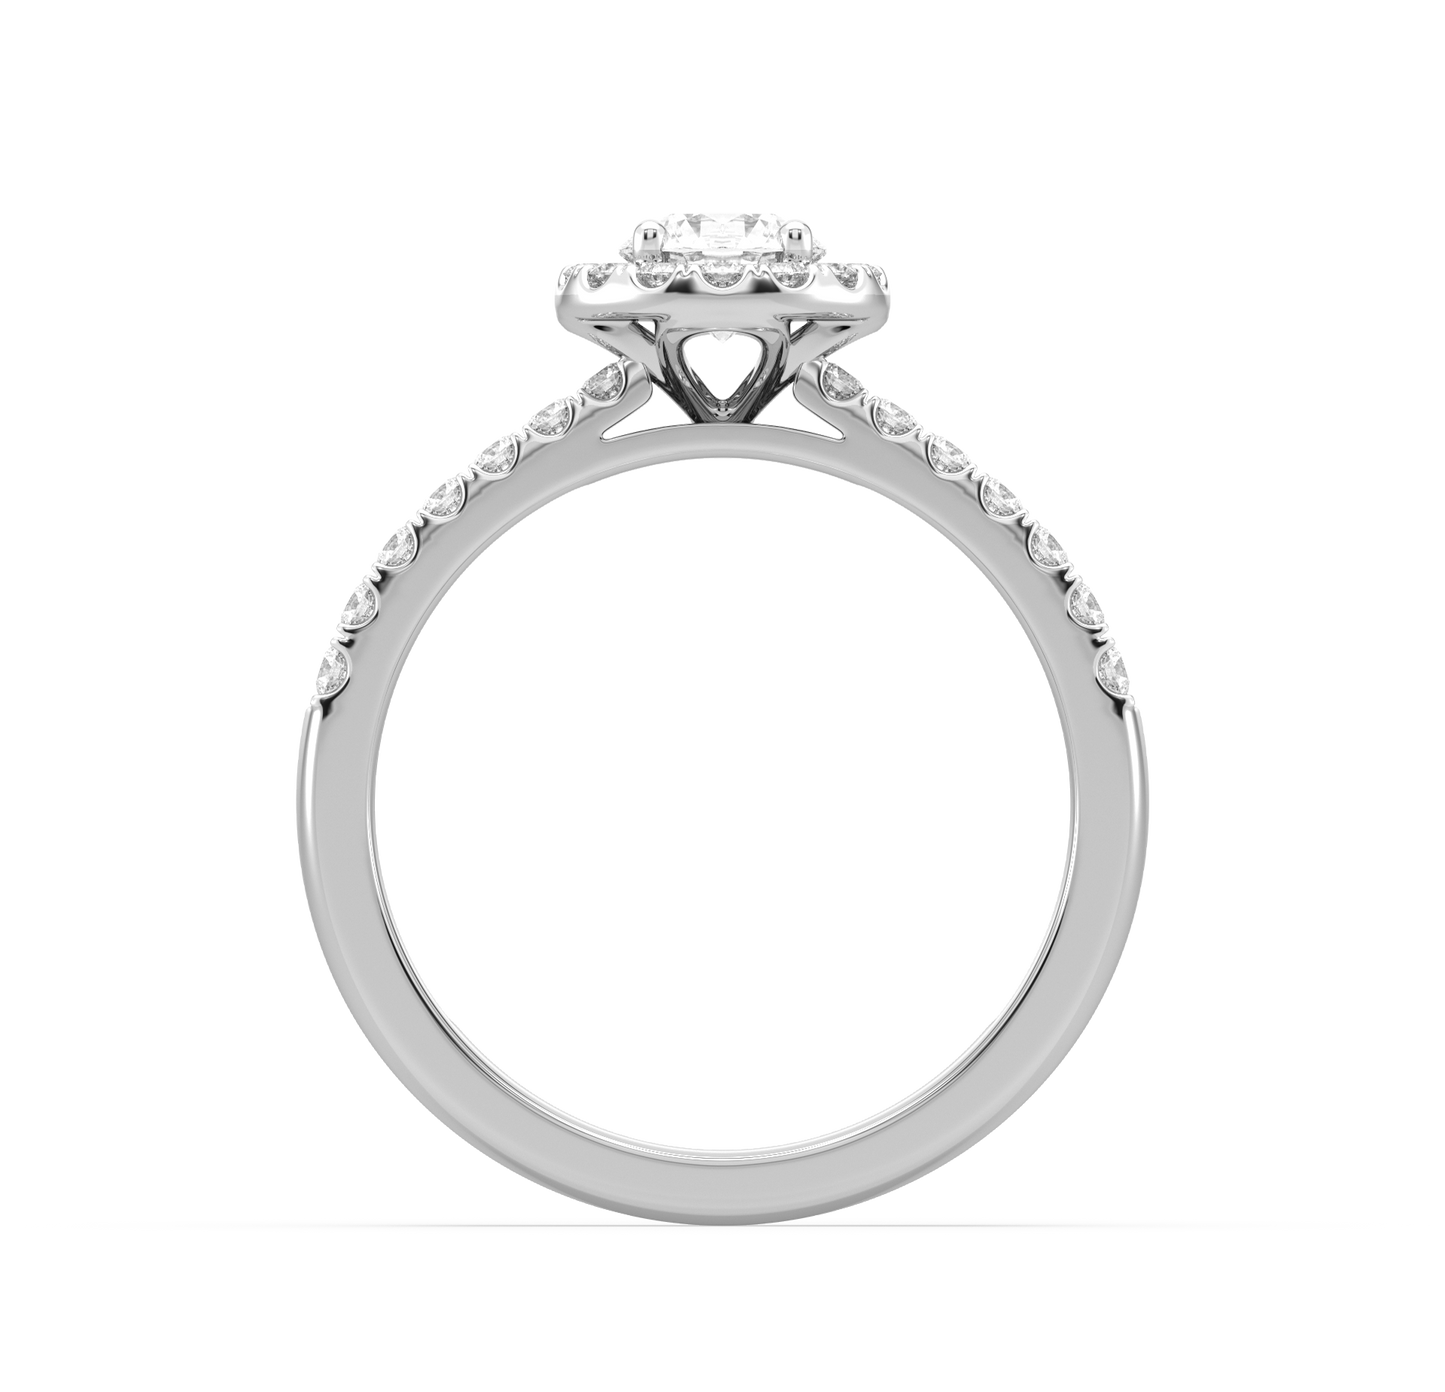 Customised ring RG21010-PH21050